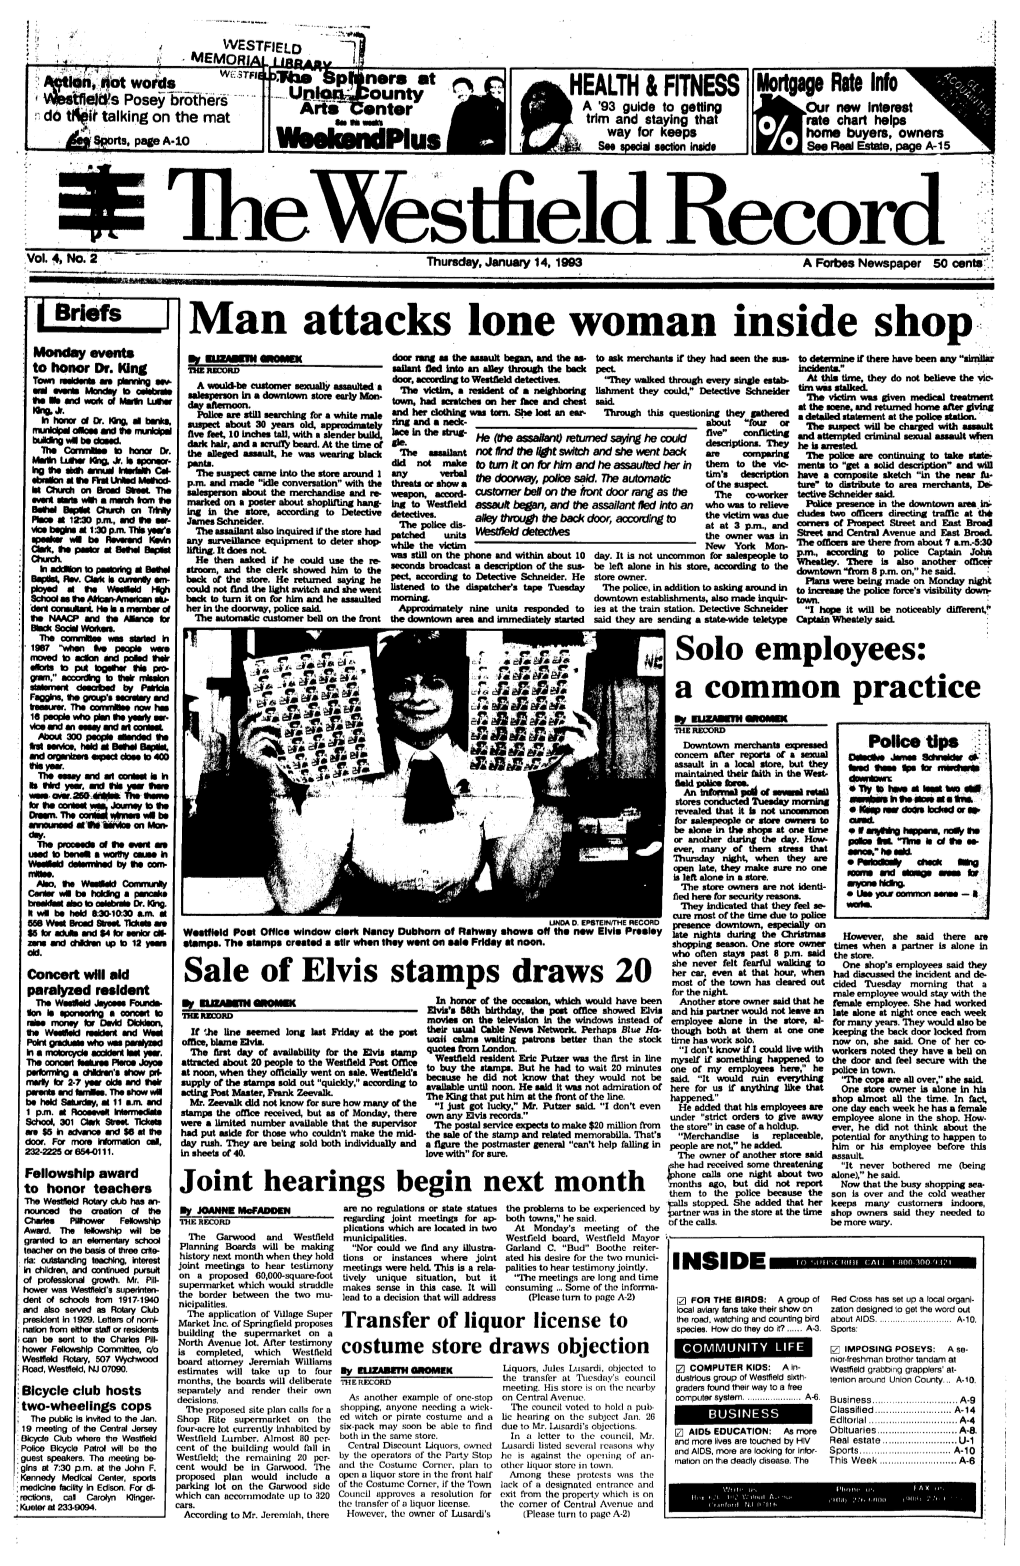 Man Attacks Lone Woman Inside Shop